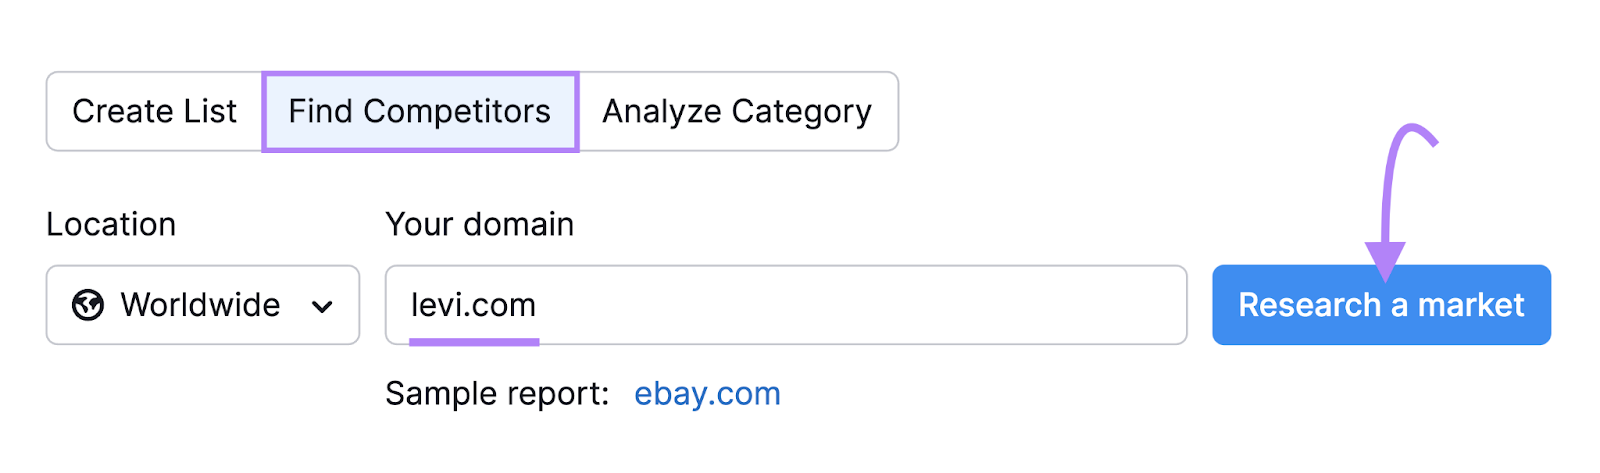 "levi.com" entered into the Market Explorer search bar